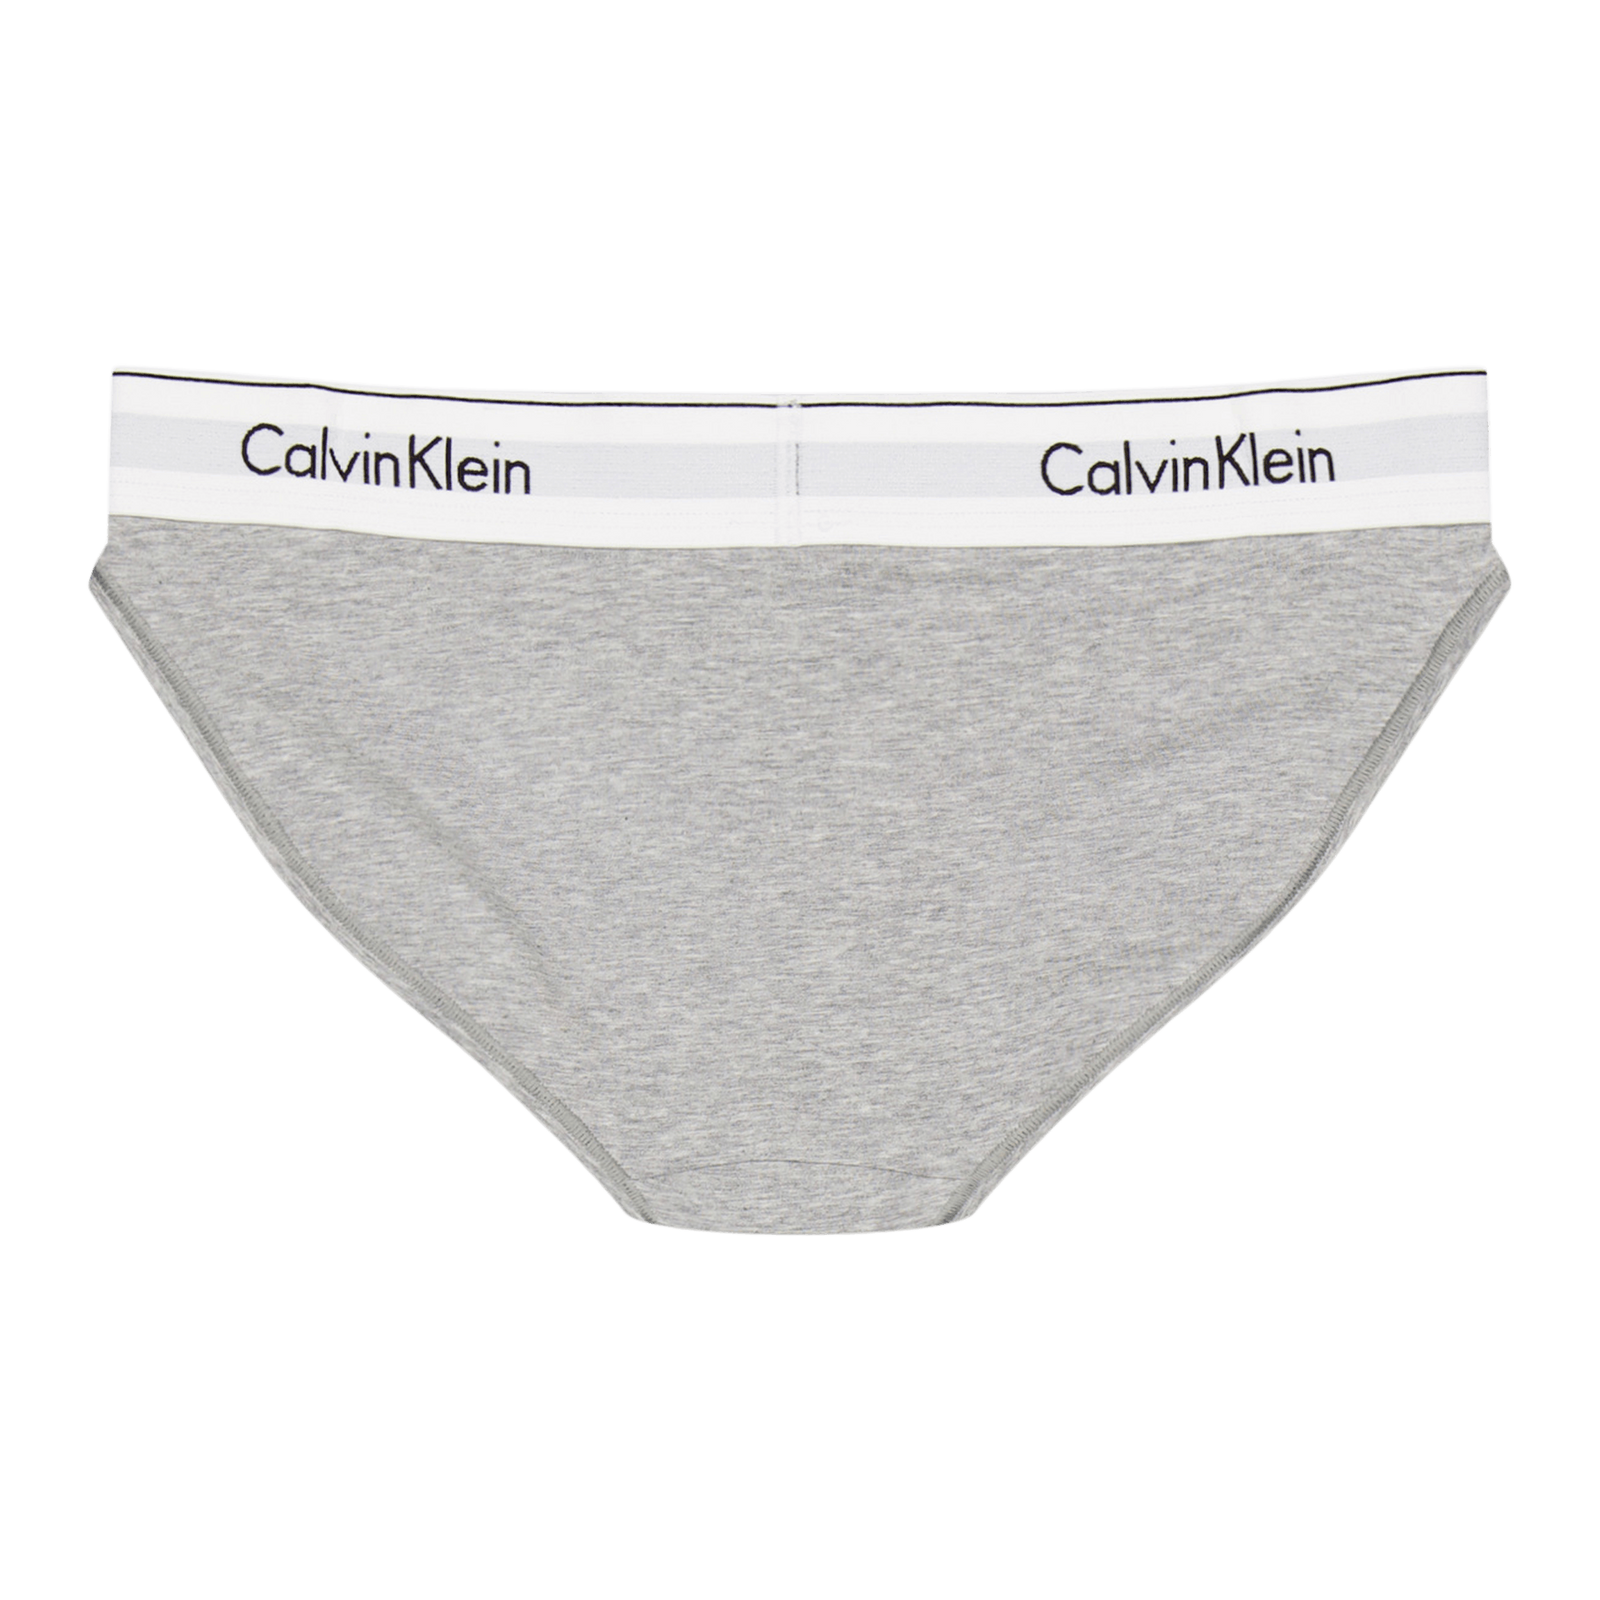 Calvin Klein Underwear Women's Modern Cotton Bikini Panties, Black